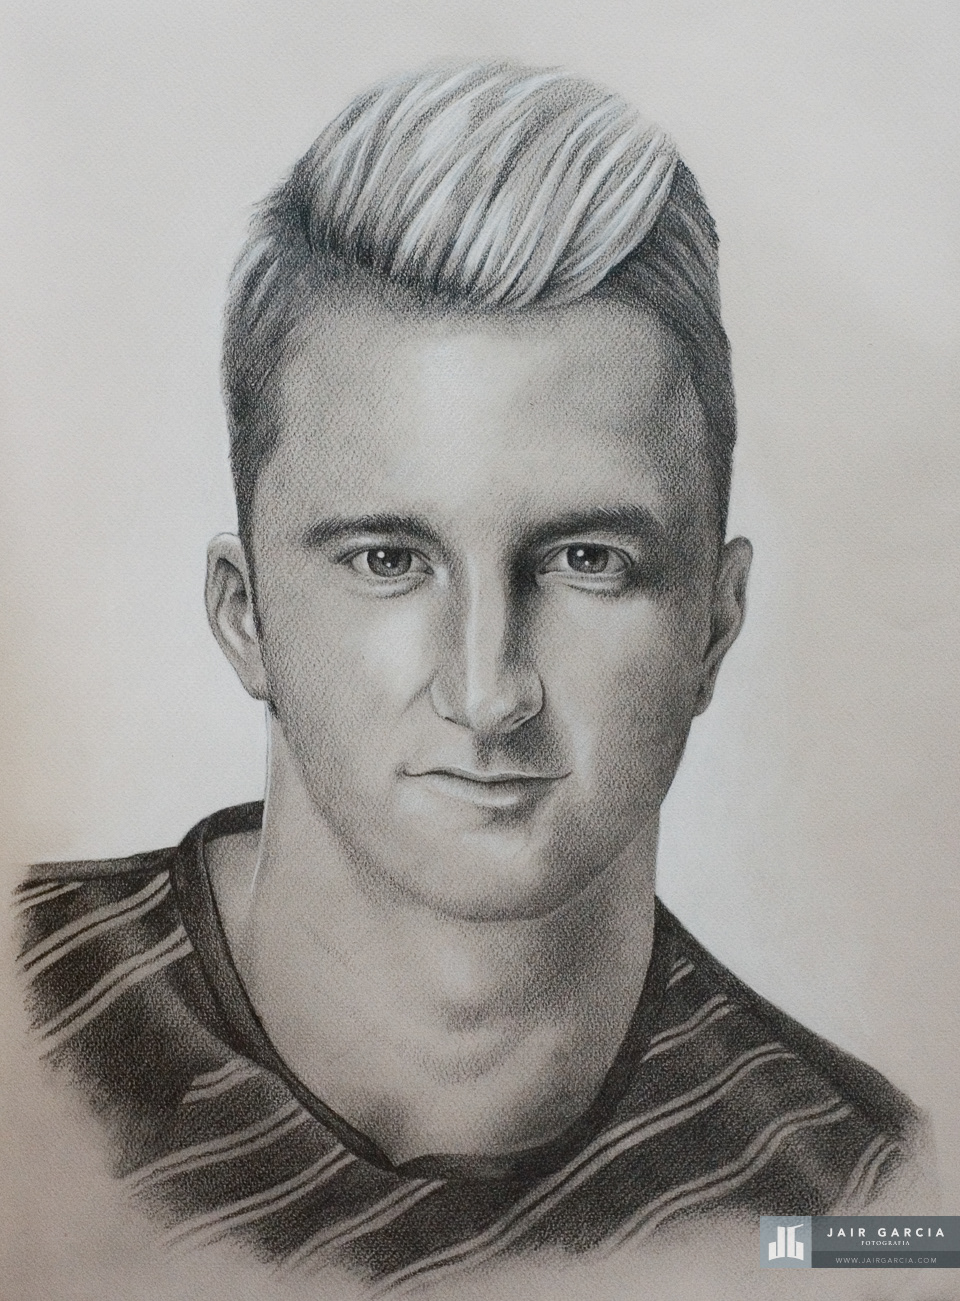 Personal Work Marco Reus Pencil drawing portait Borussia Dortmund Football Player soccer